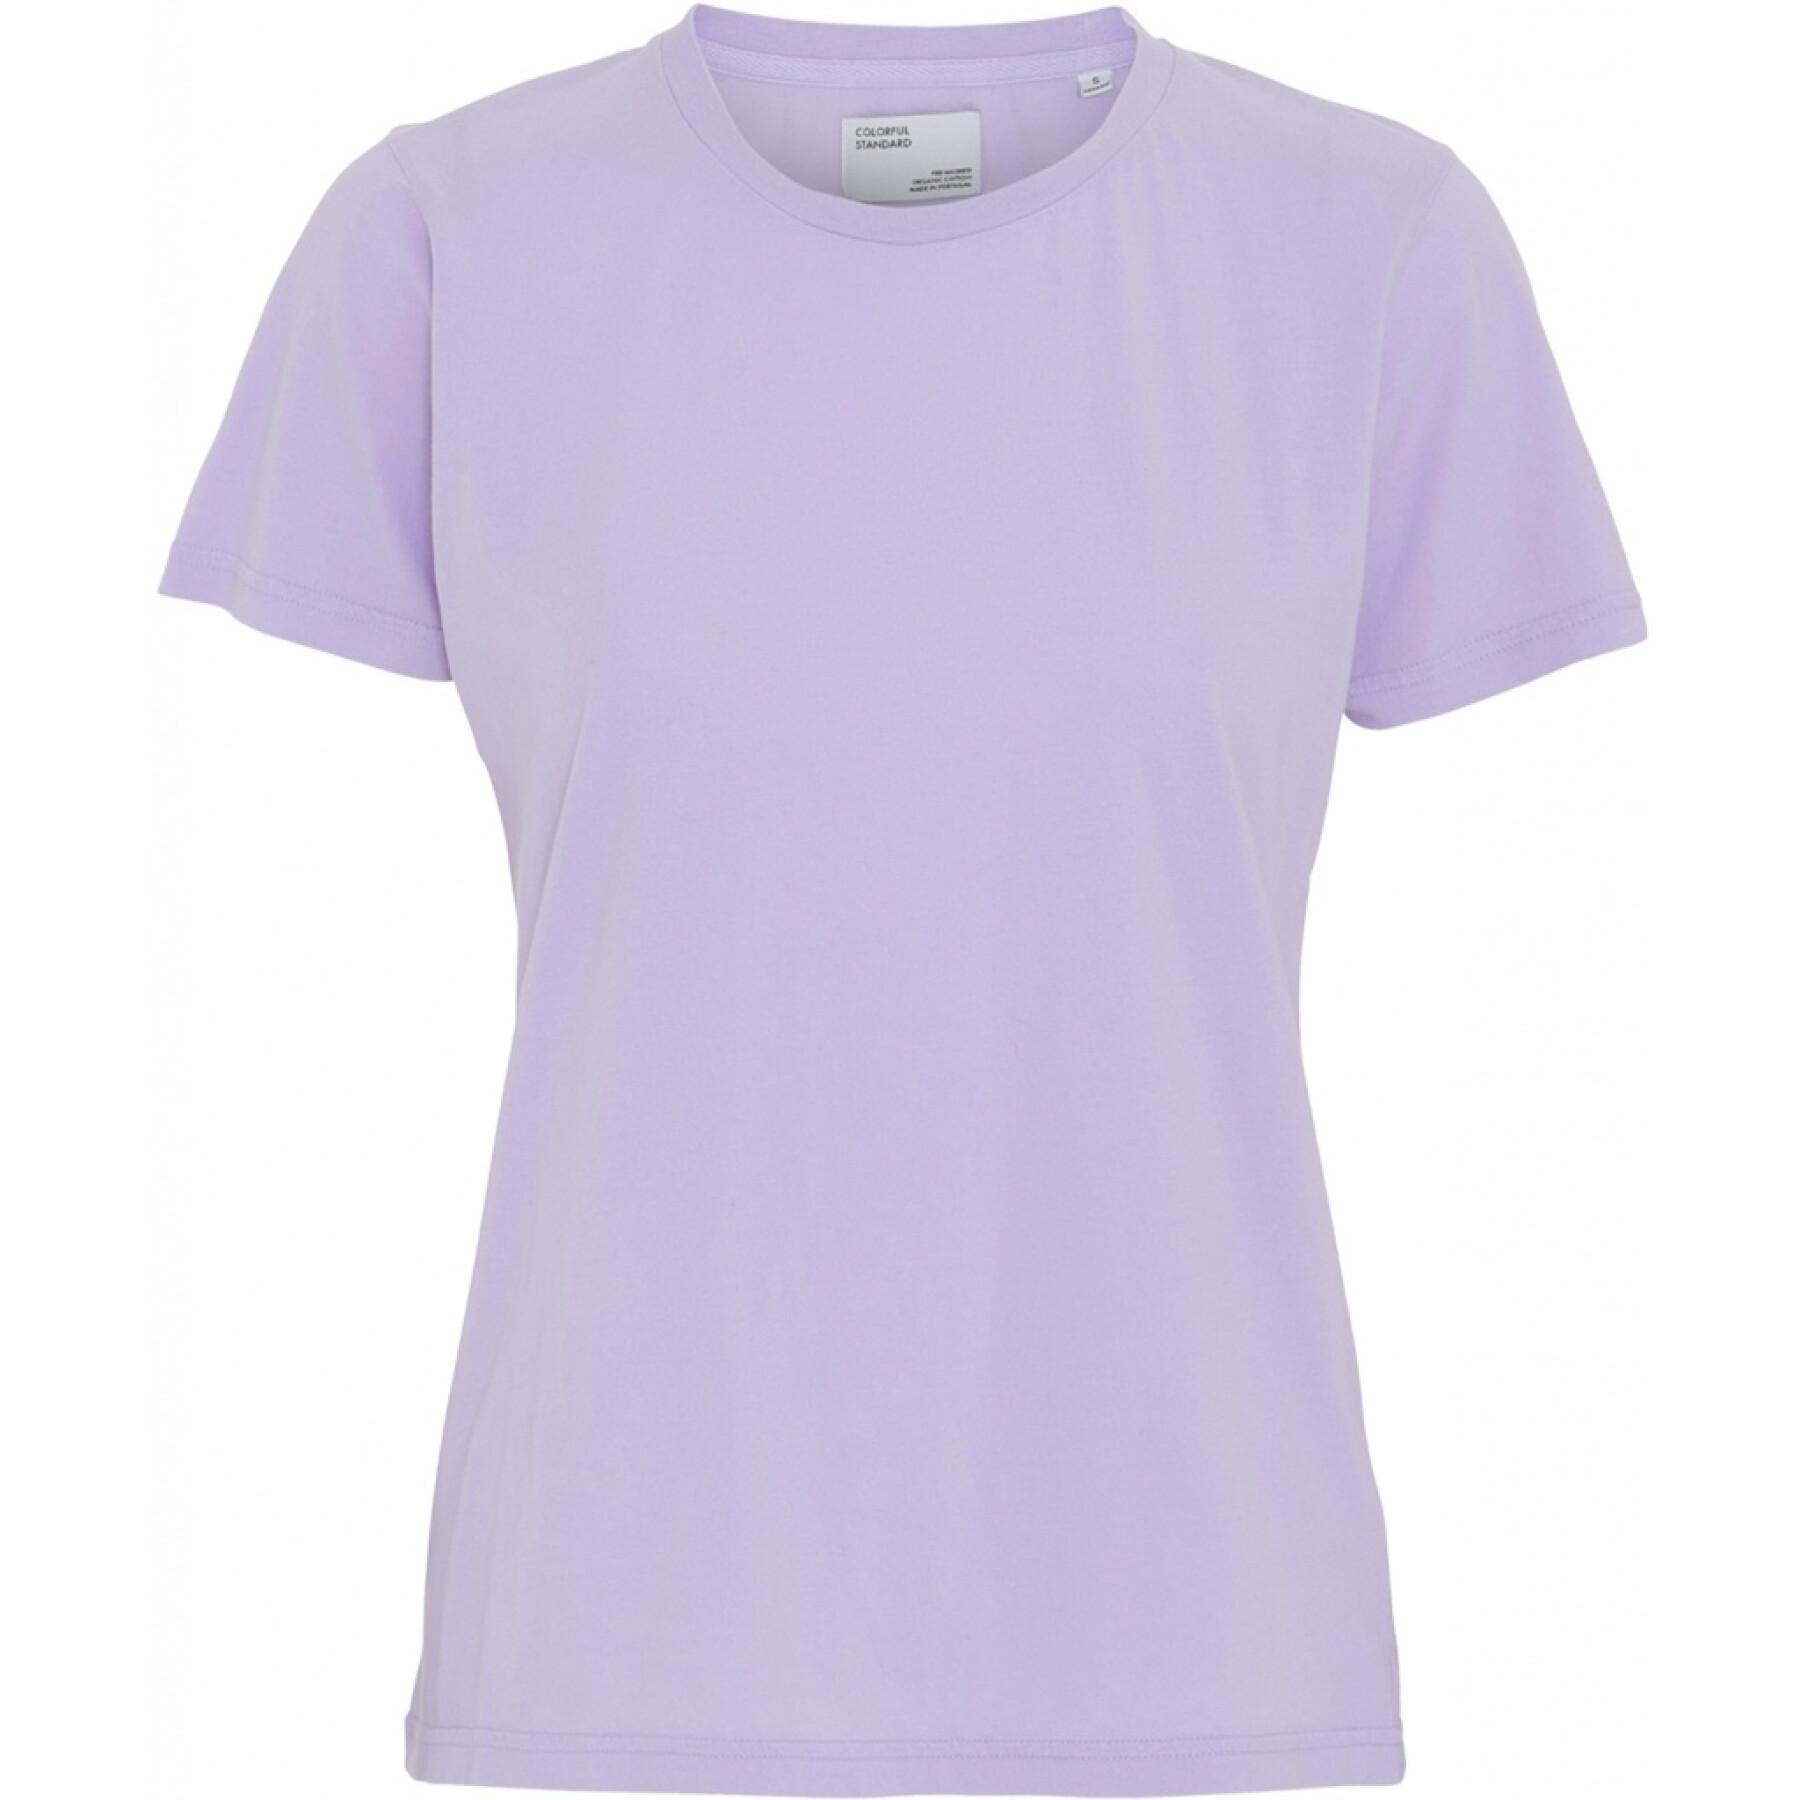 Camiseta feminina Colorful Standard Light Organic soft lavender